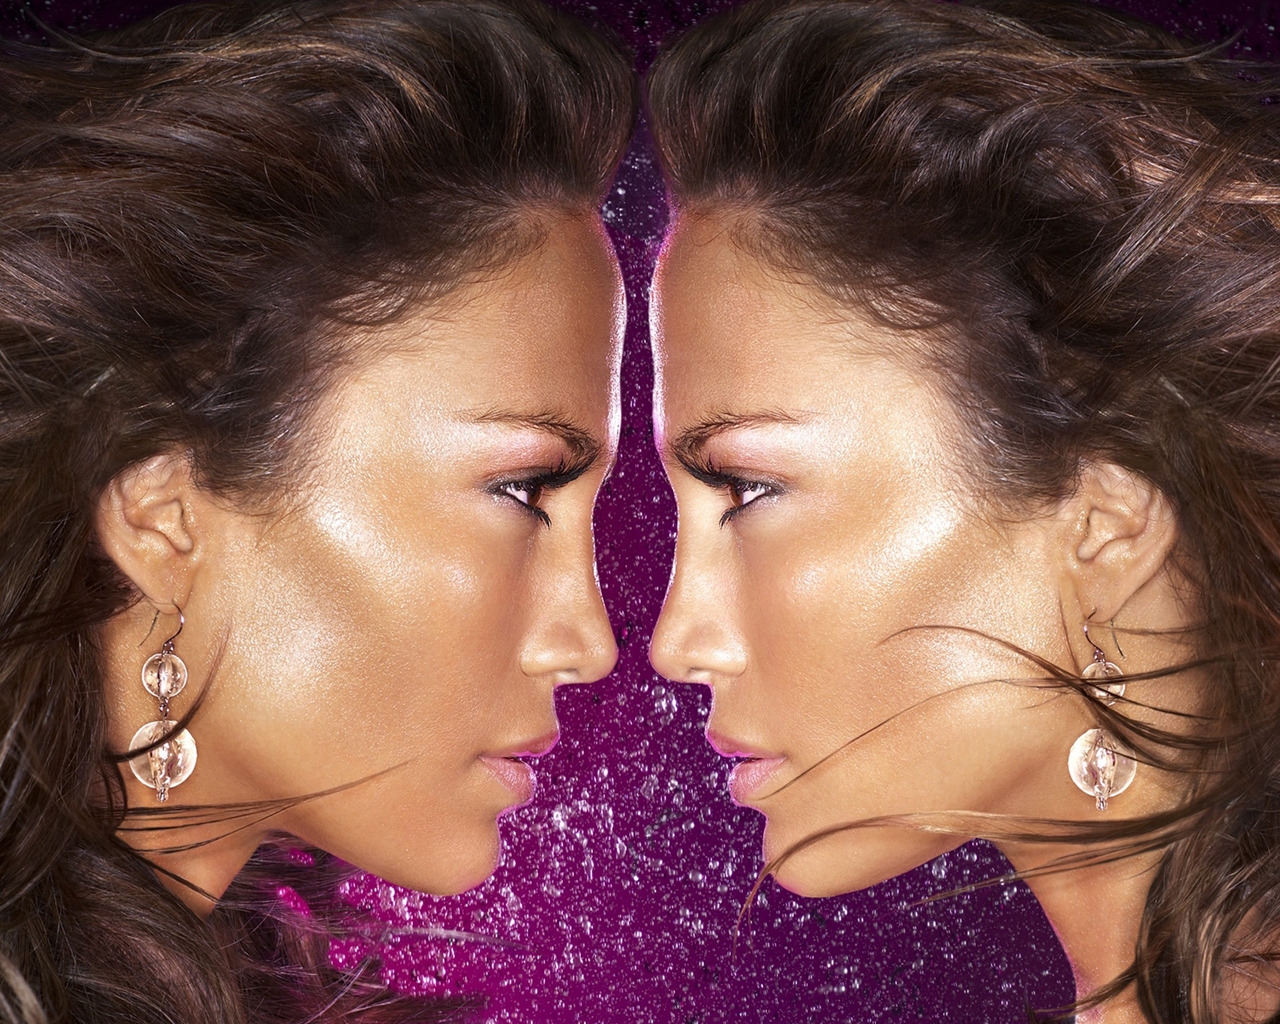 Jennifer Lopez Brave for 1280 x 1024 resolution